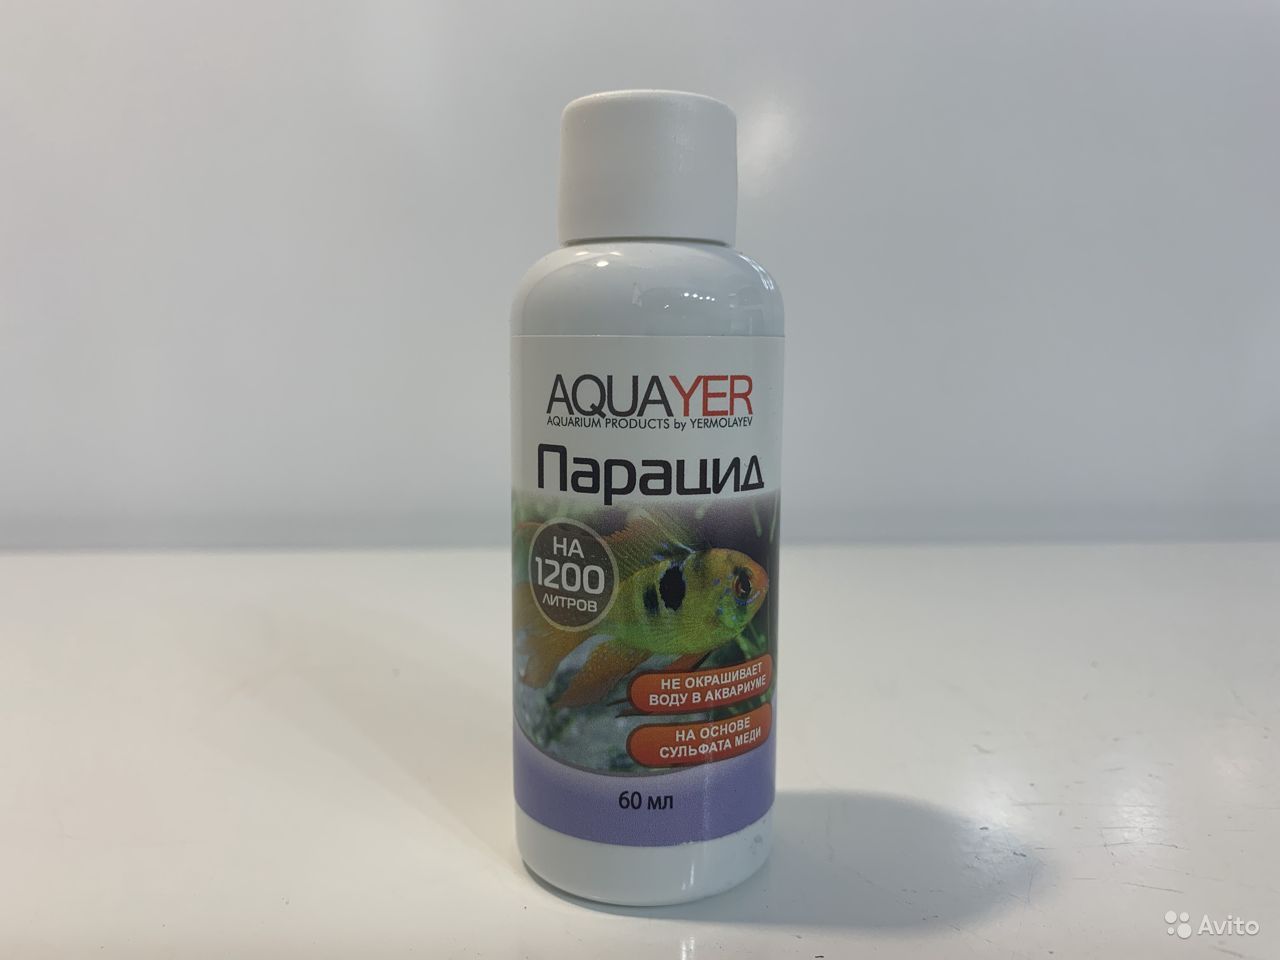 Aquayer Парацид 60 ml